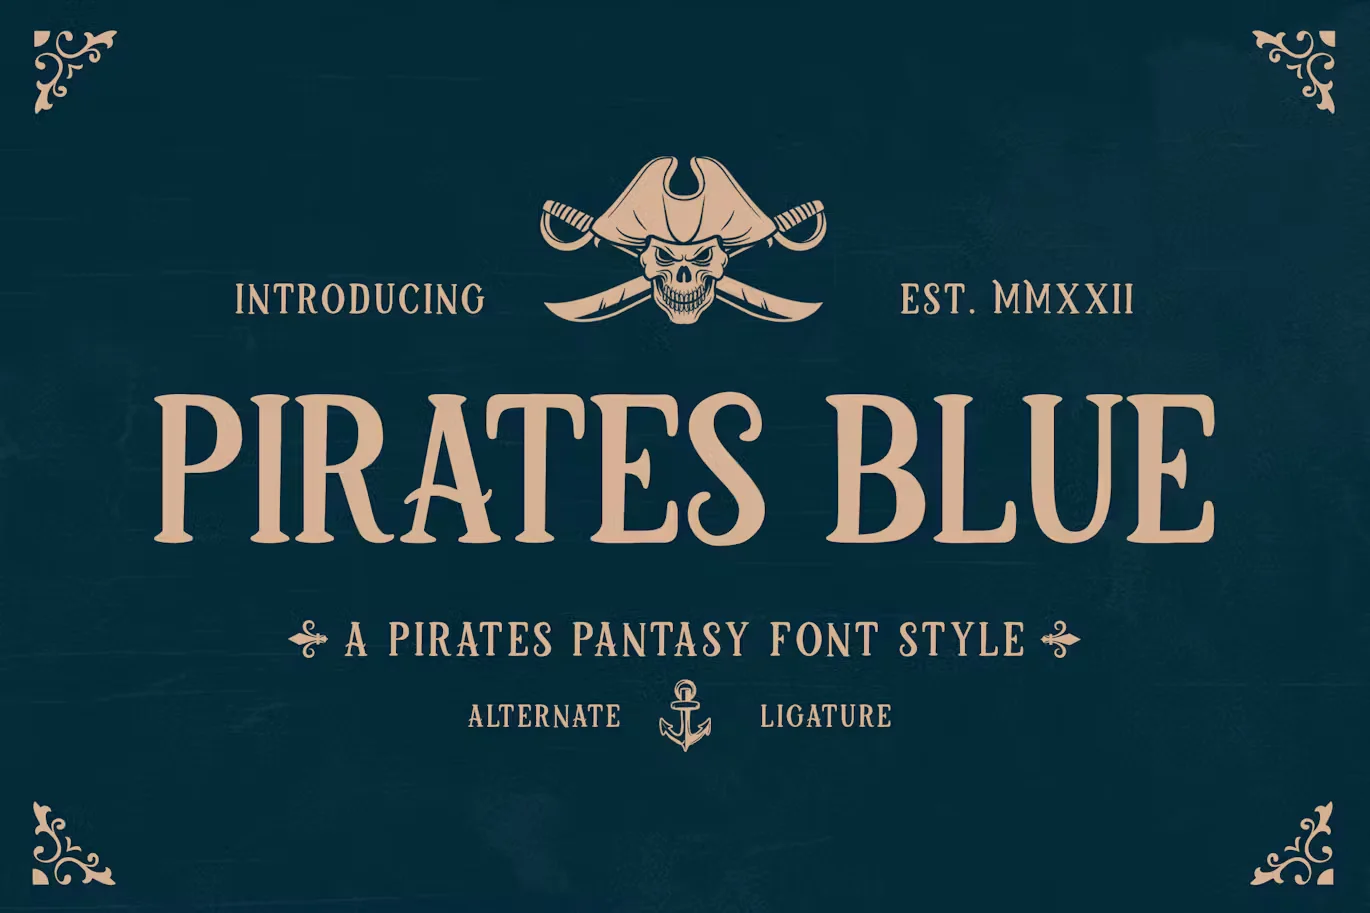 Pirates Blue - A Pirates Fantasy Font